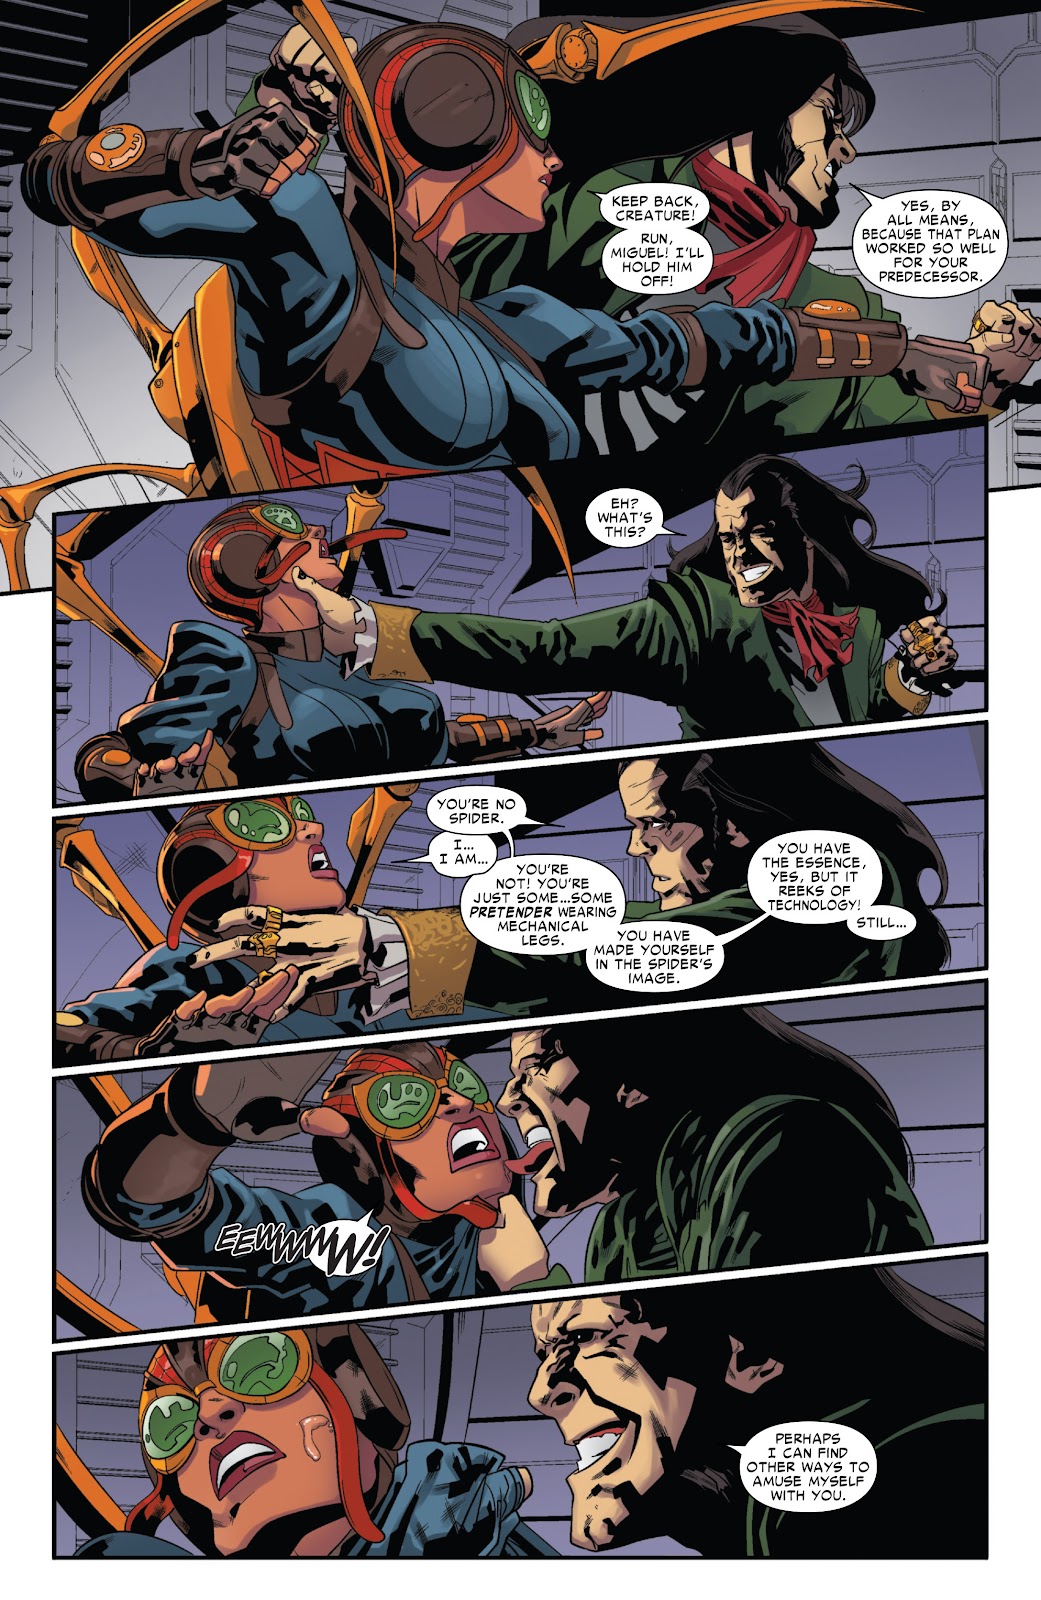 Spider-Man 2099 (2014) issue 6 - Page 12